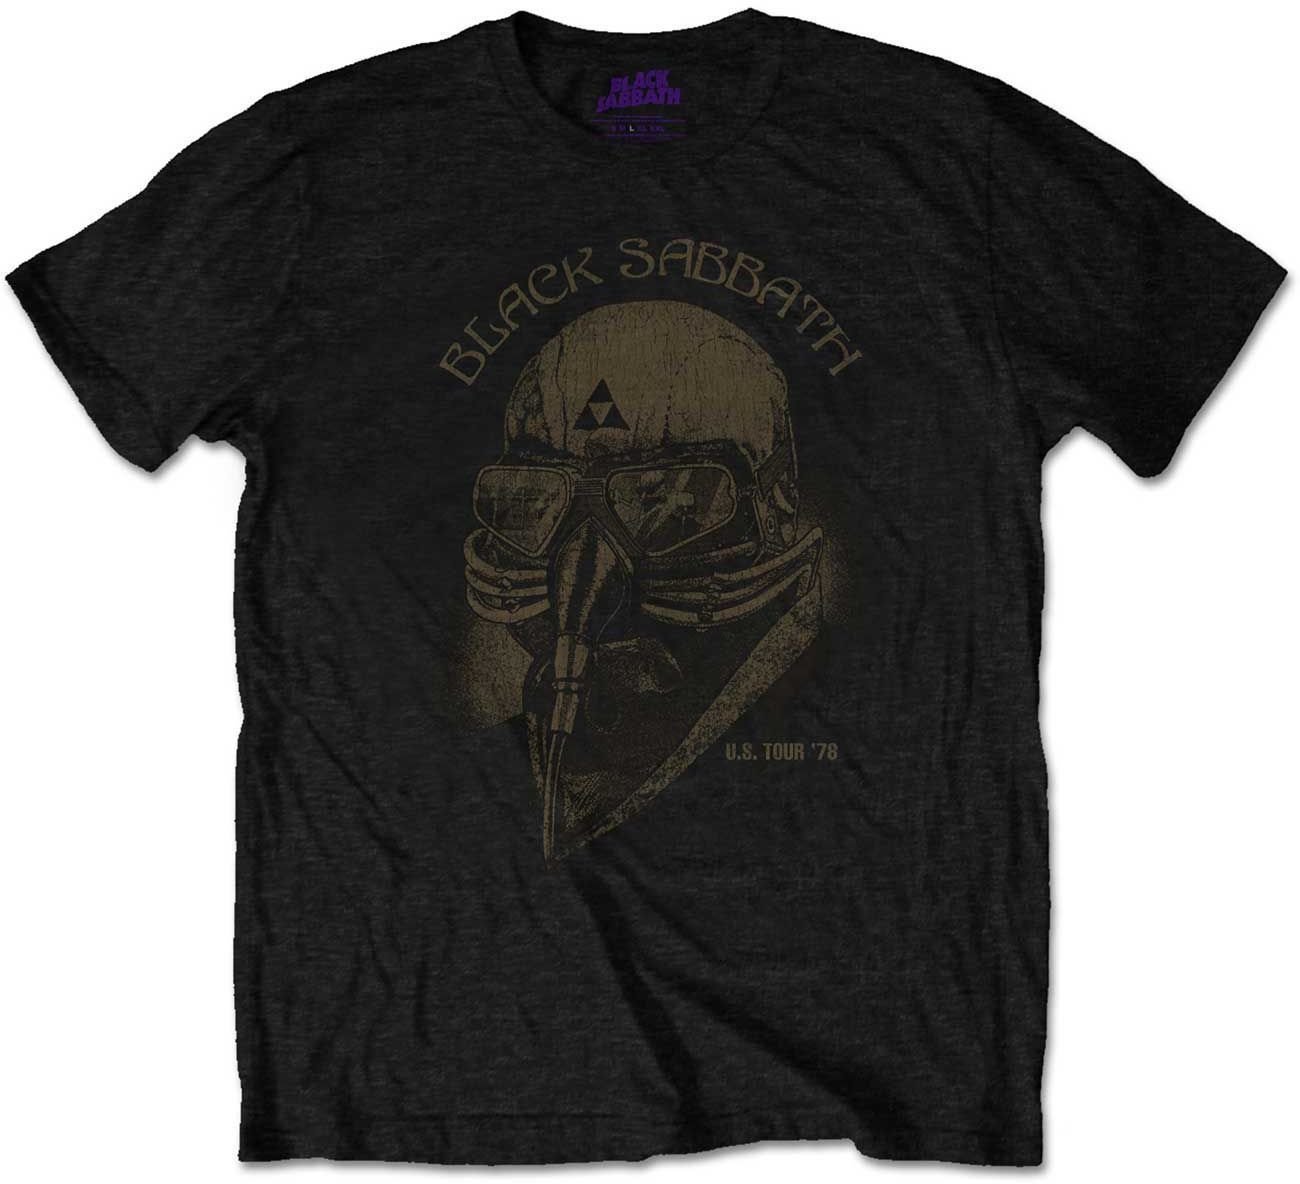 Shirt Black Sabbath Shirt US Tour 1978 Black S